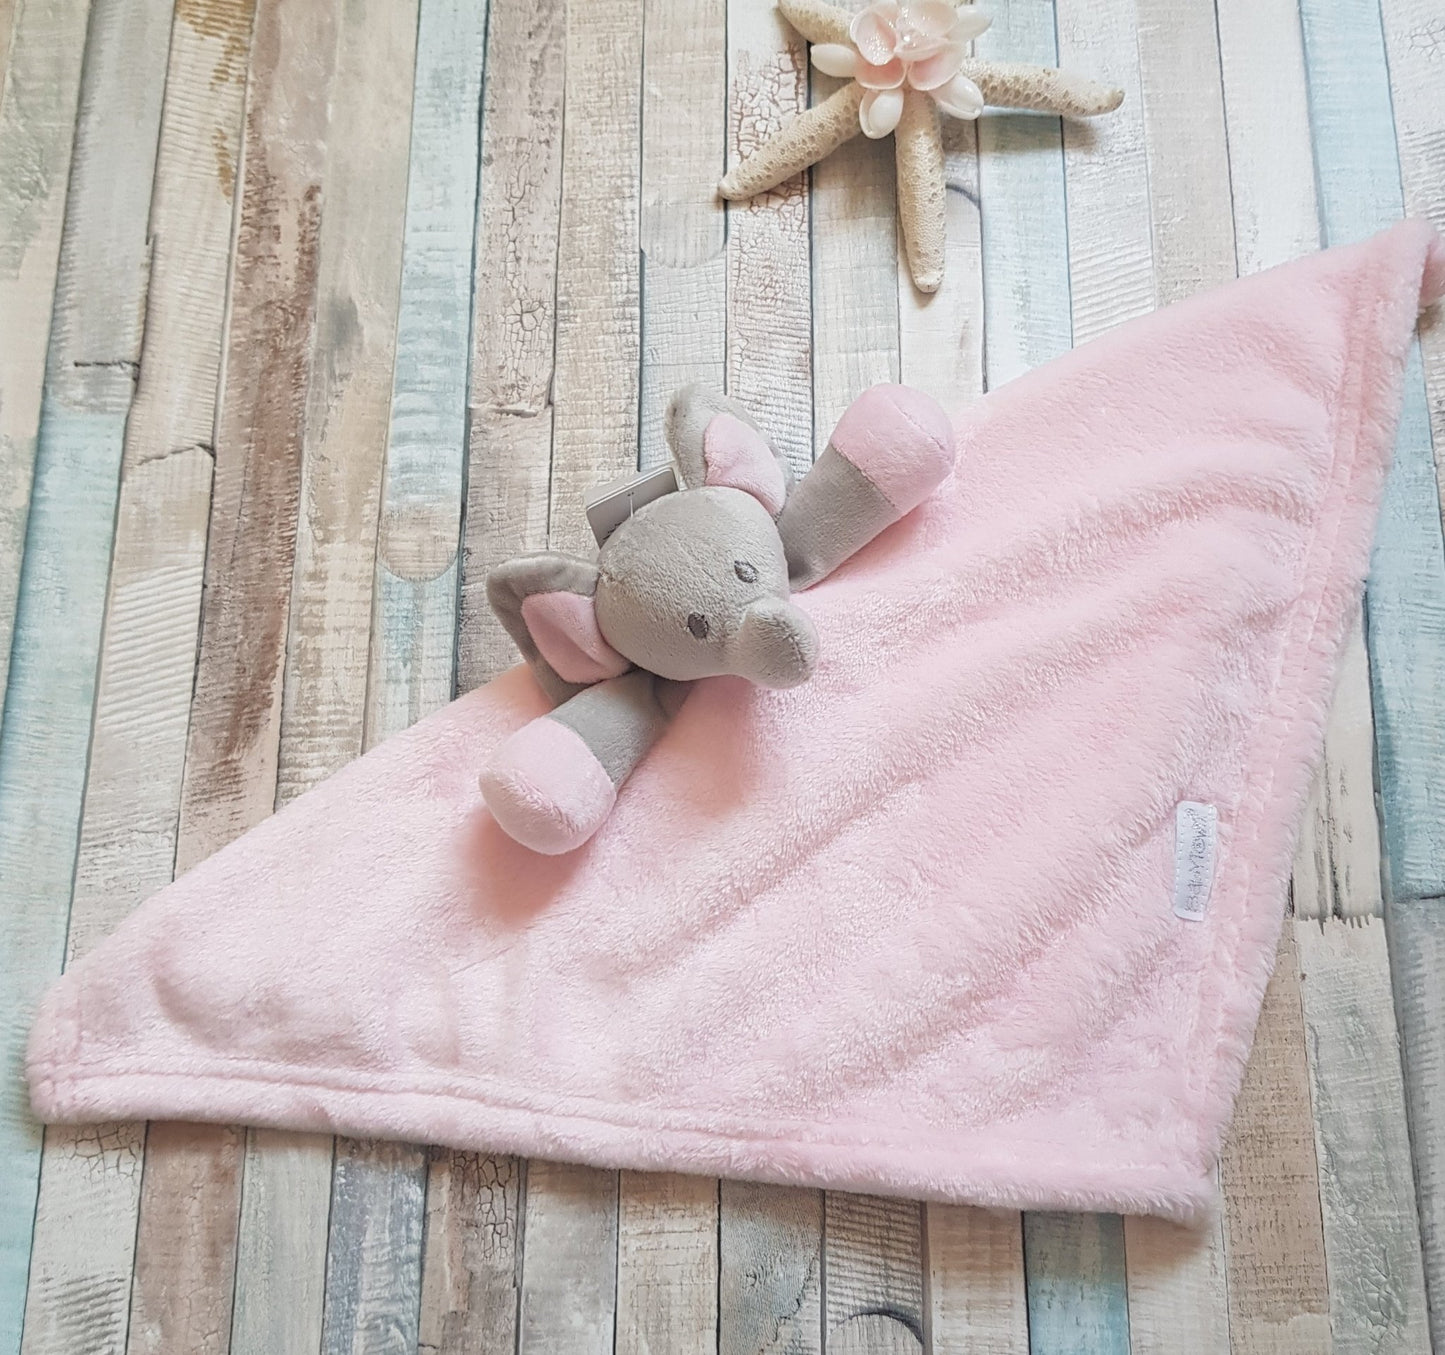 Novelty Baby Elephant Comforter - Nana B Baby & Childrenswear Boutique